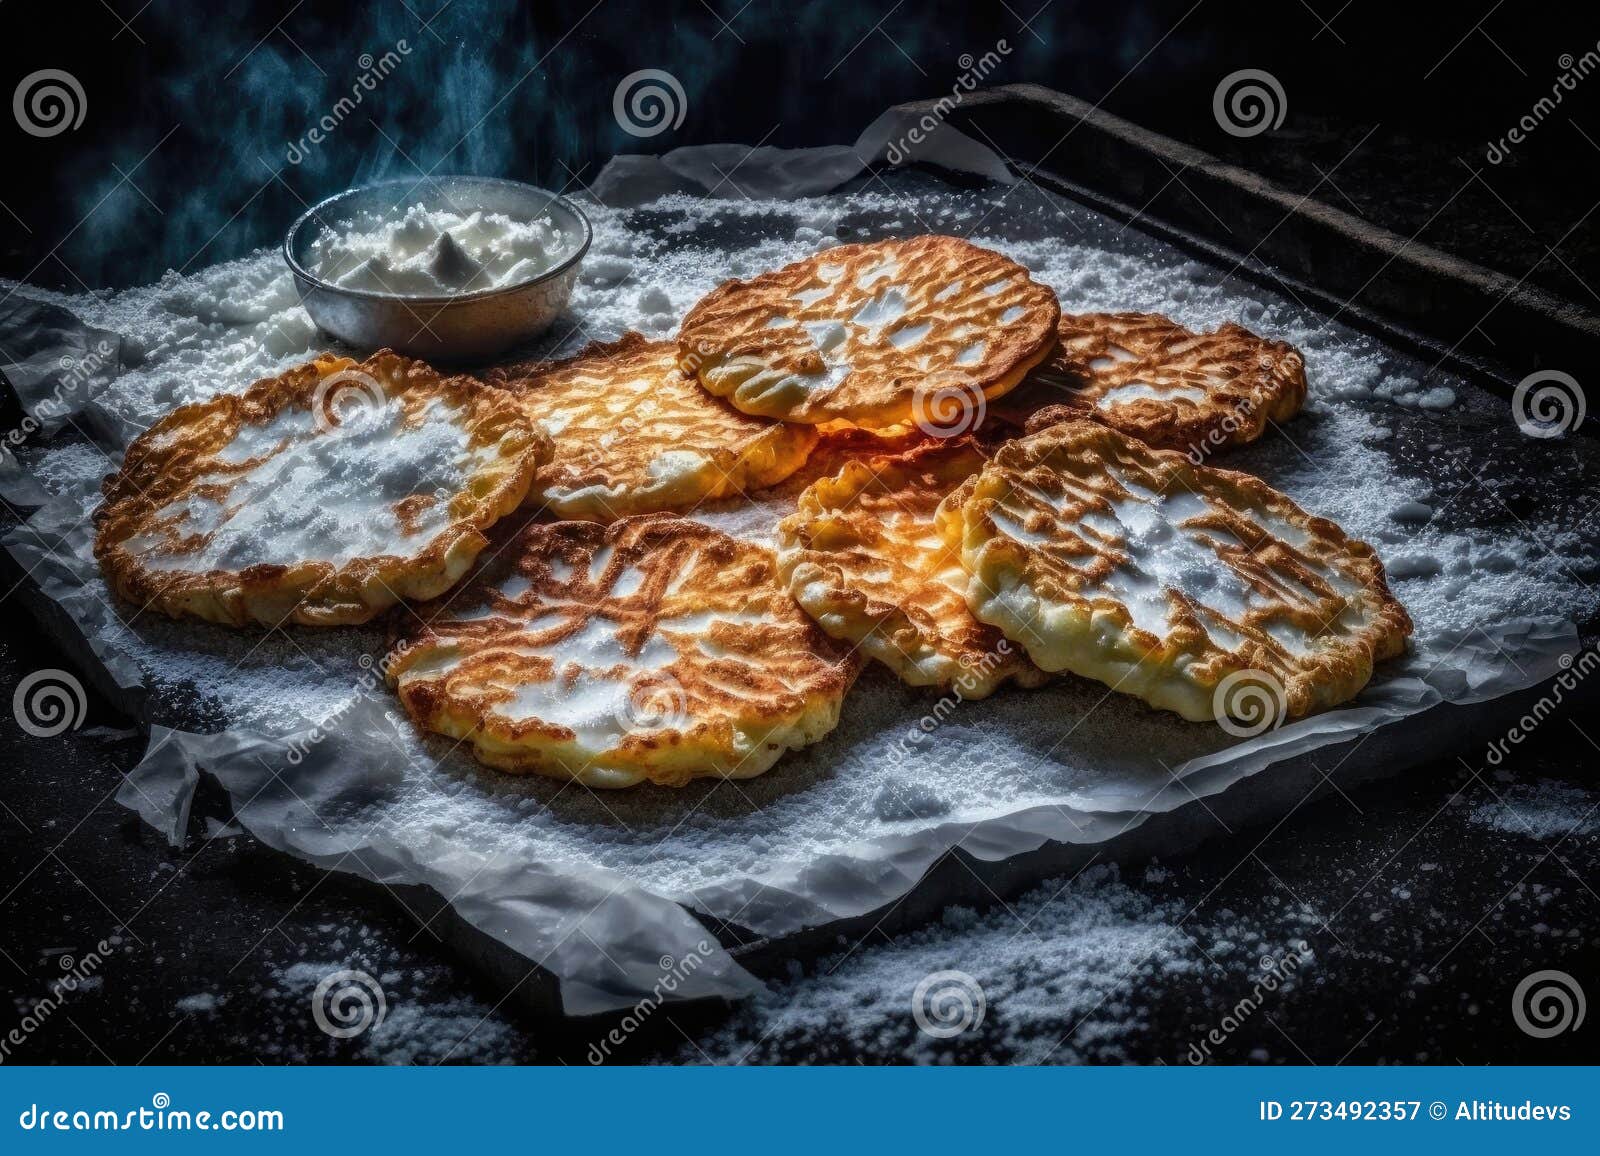 https://thumbs.dreamstime.com/z/crispy-potato-pancakes-flour-fried-griddle-crispy-potato-pancakes-flour-fried-griddle-created-generative-ai-273492357.jpg